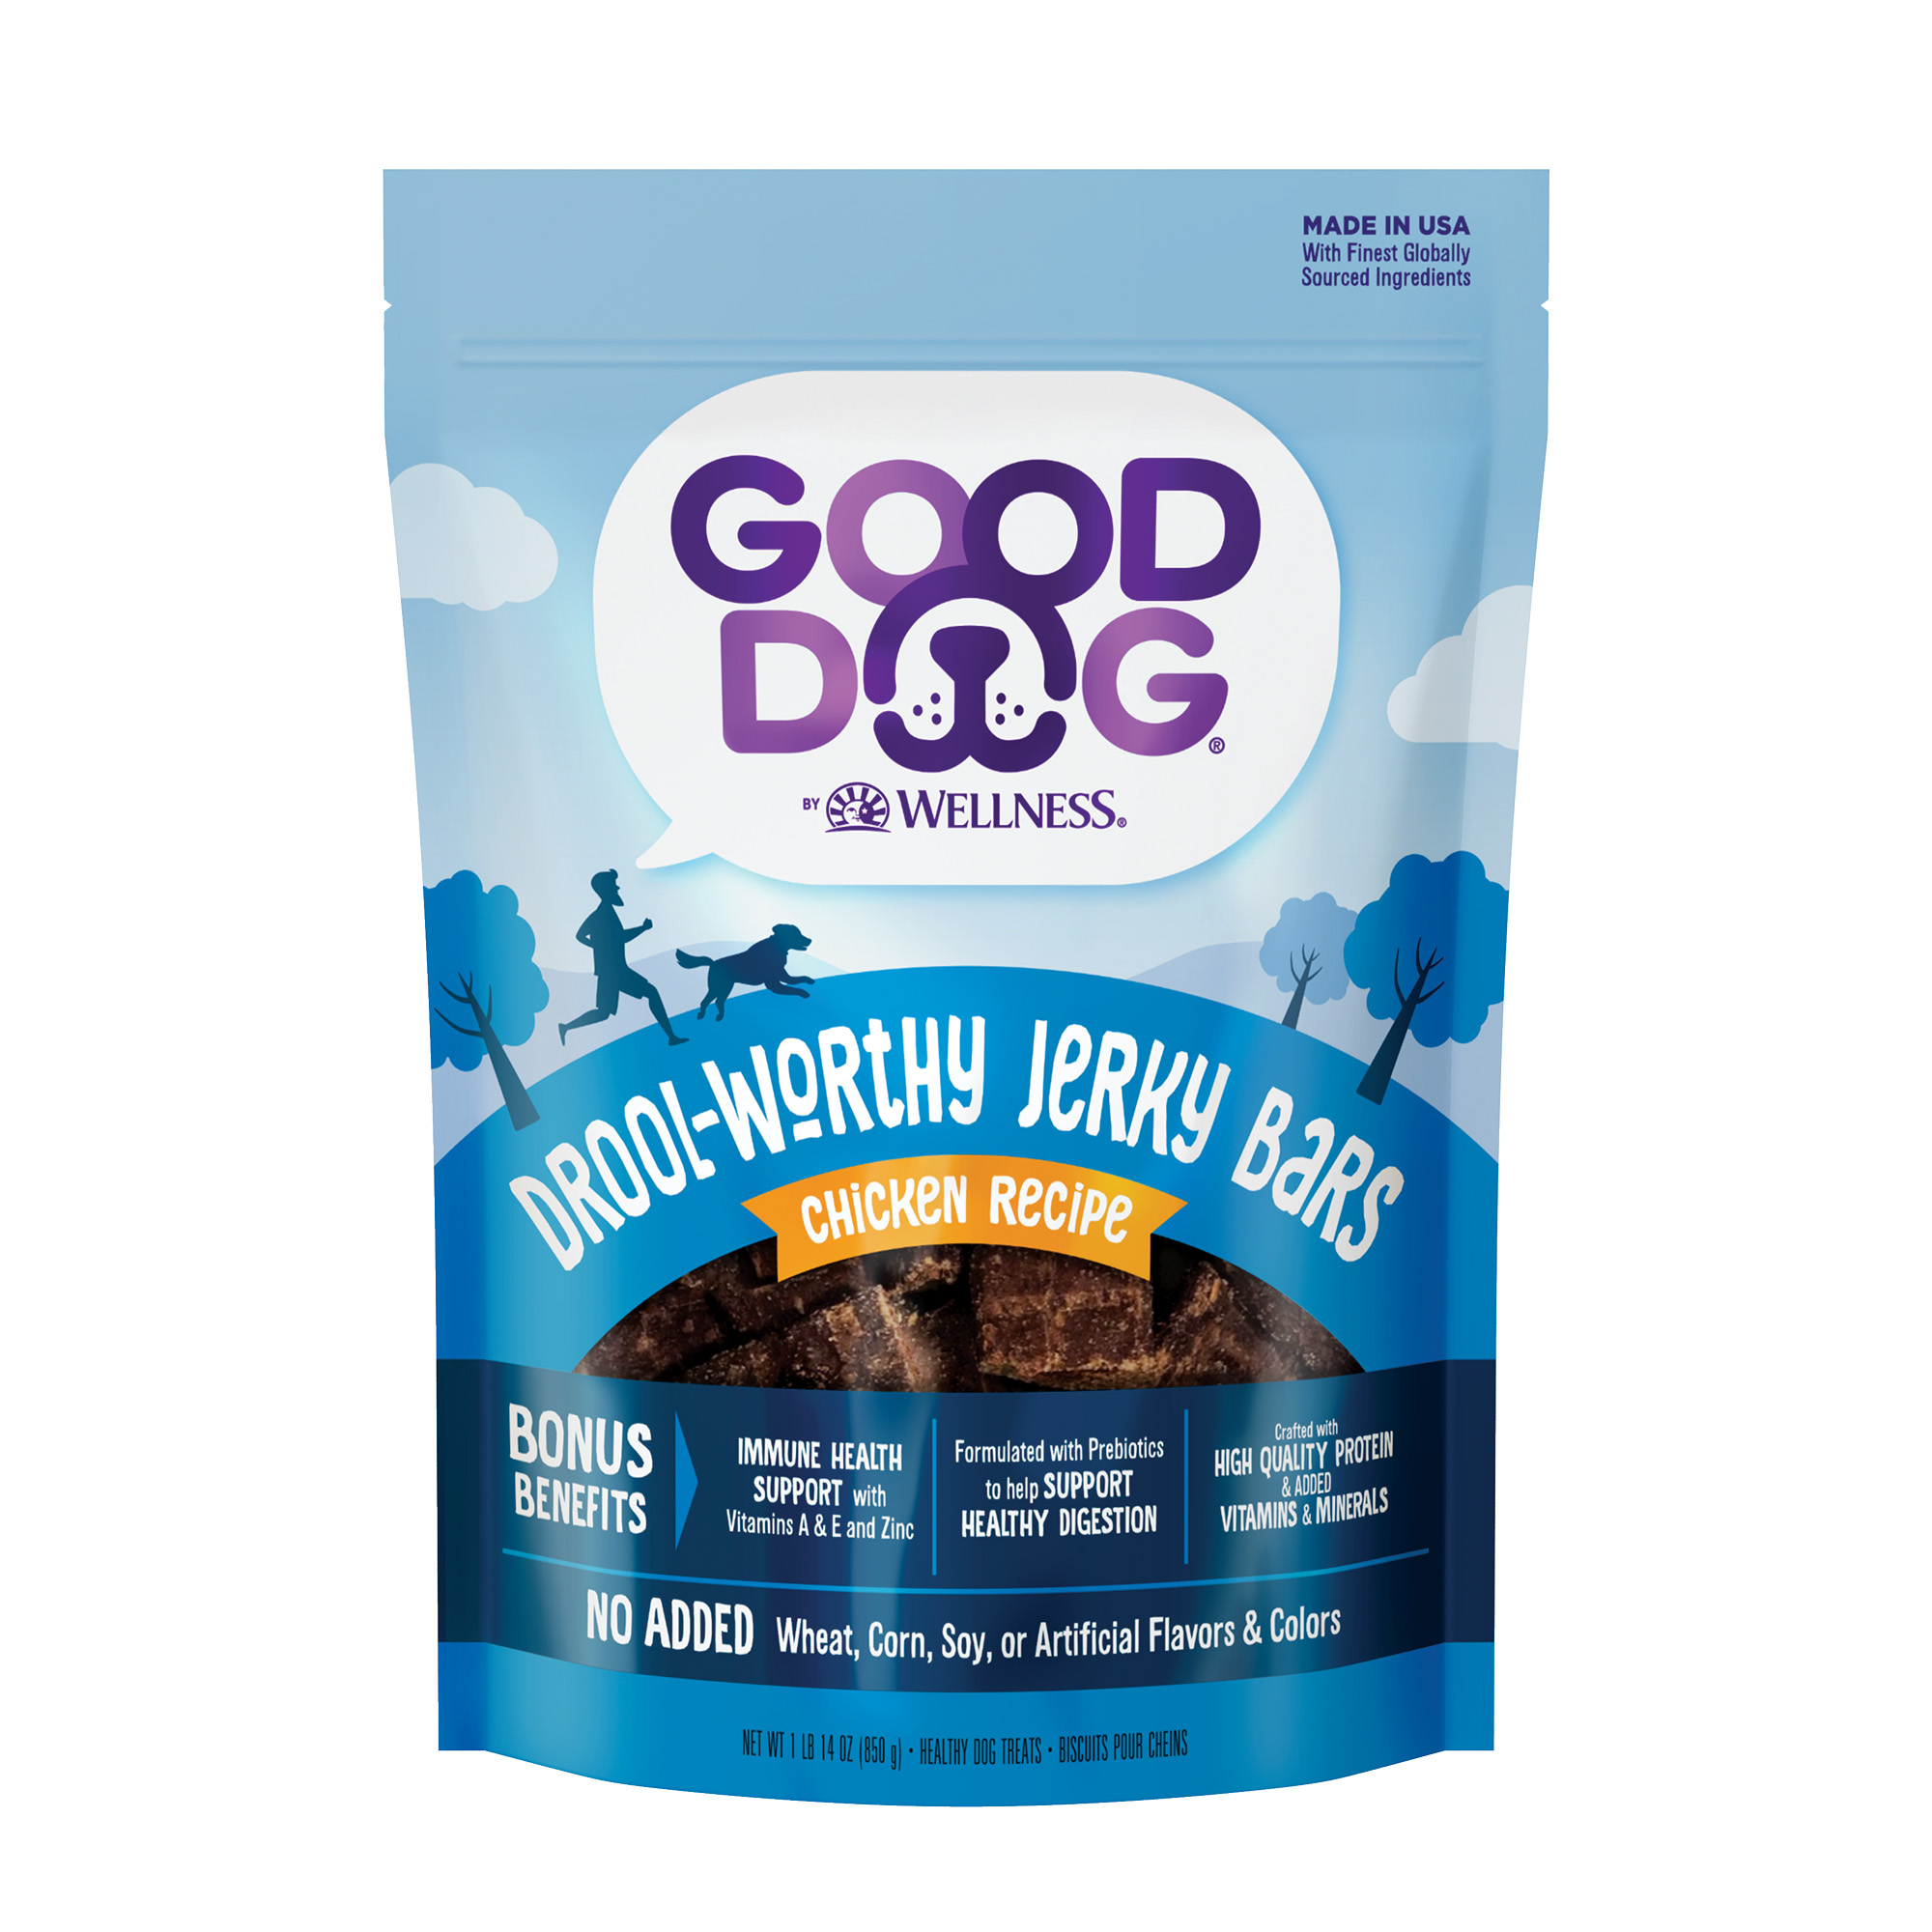 Good Dog Drool-Worthy Jerky Bars Chicken